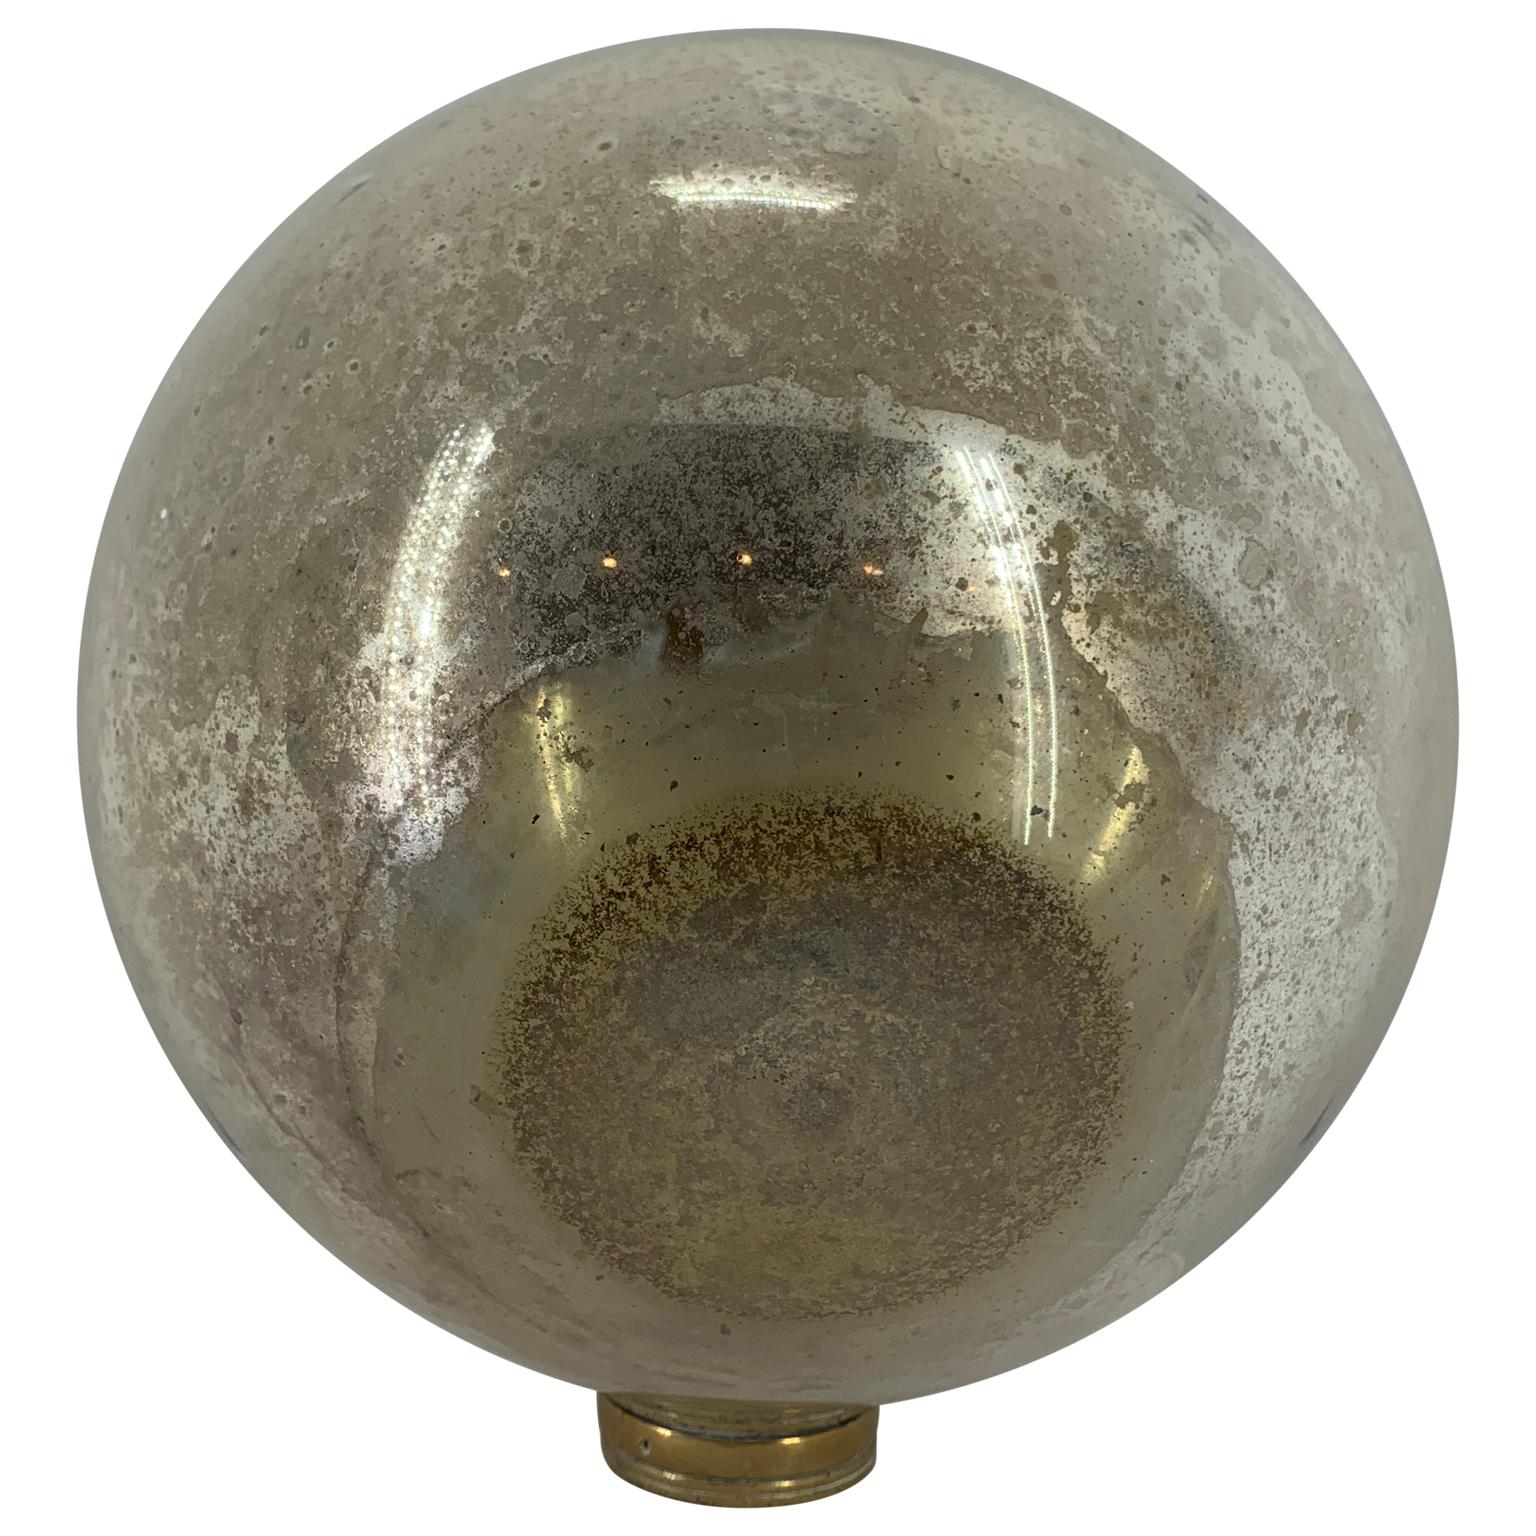 Large Danish decorative mirror ball with brass hardware.